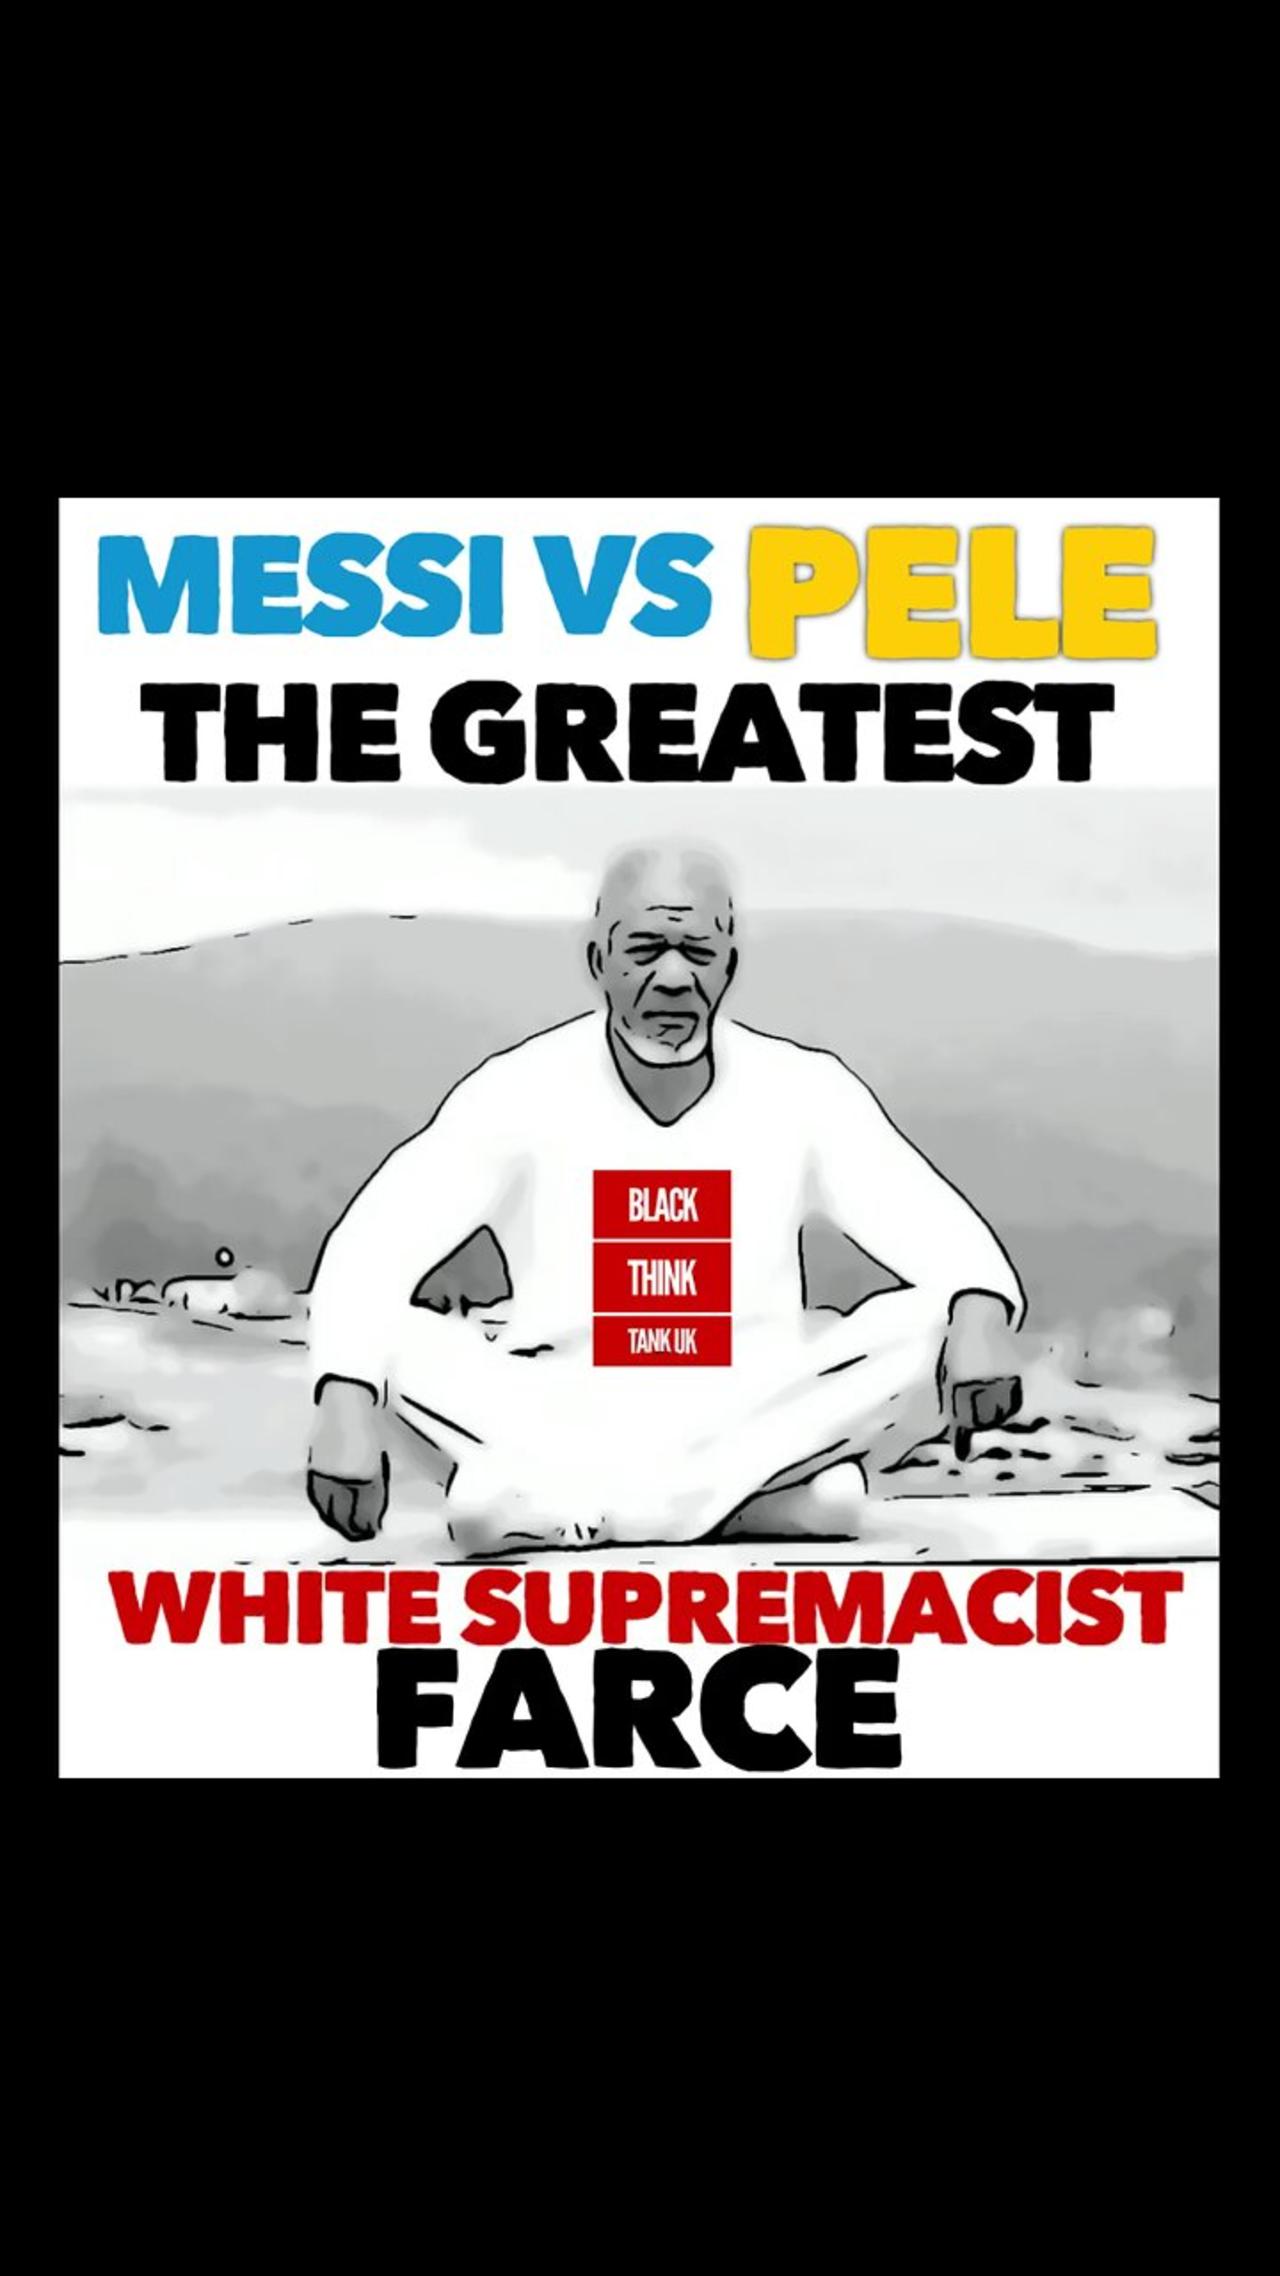 Messi vs Pele - The stats don’t lie PELEGOAT